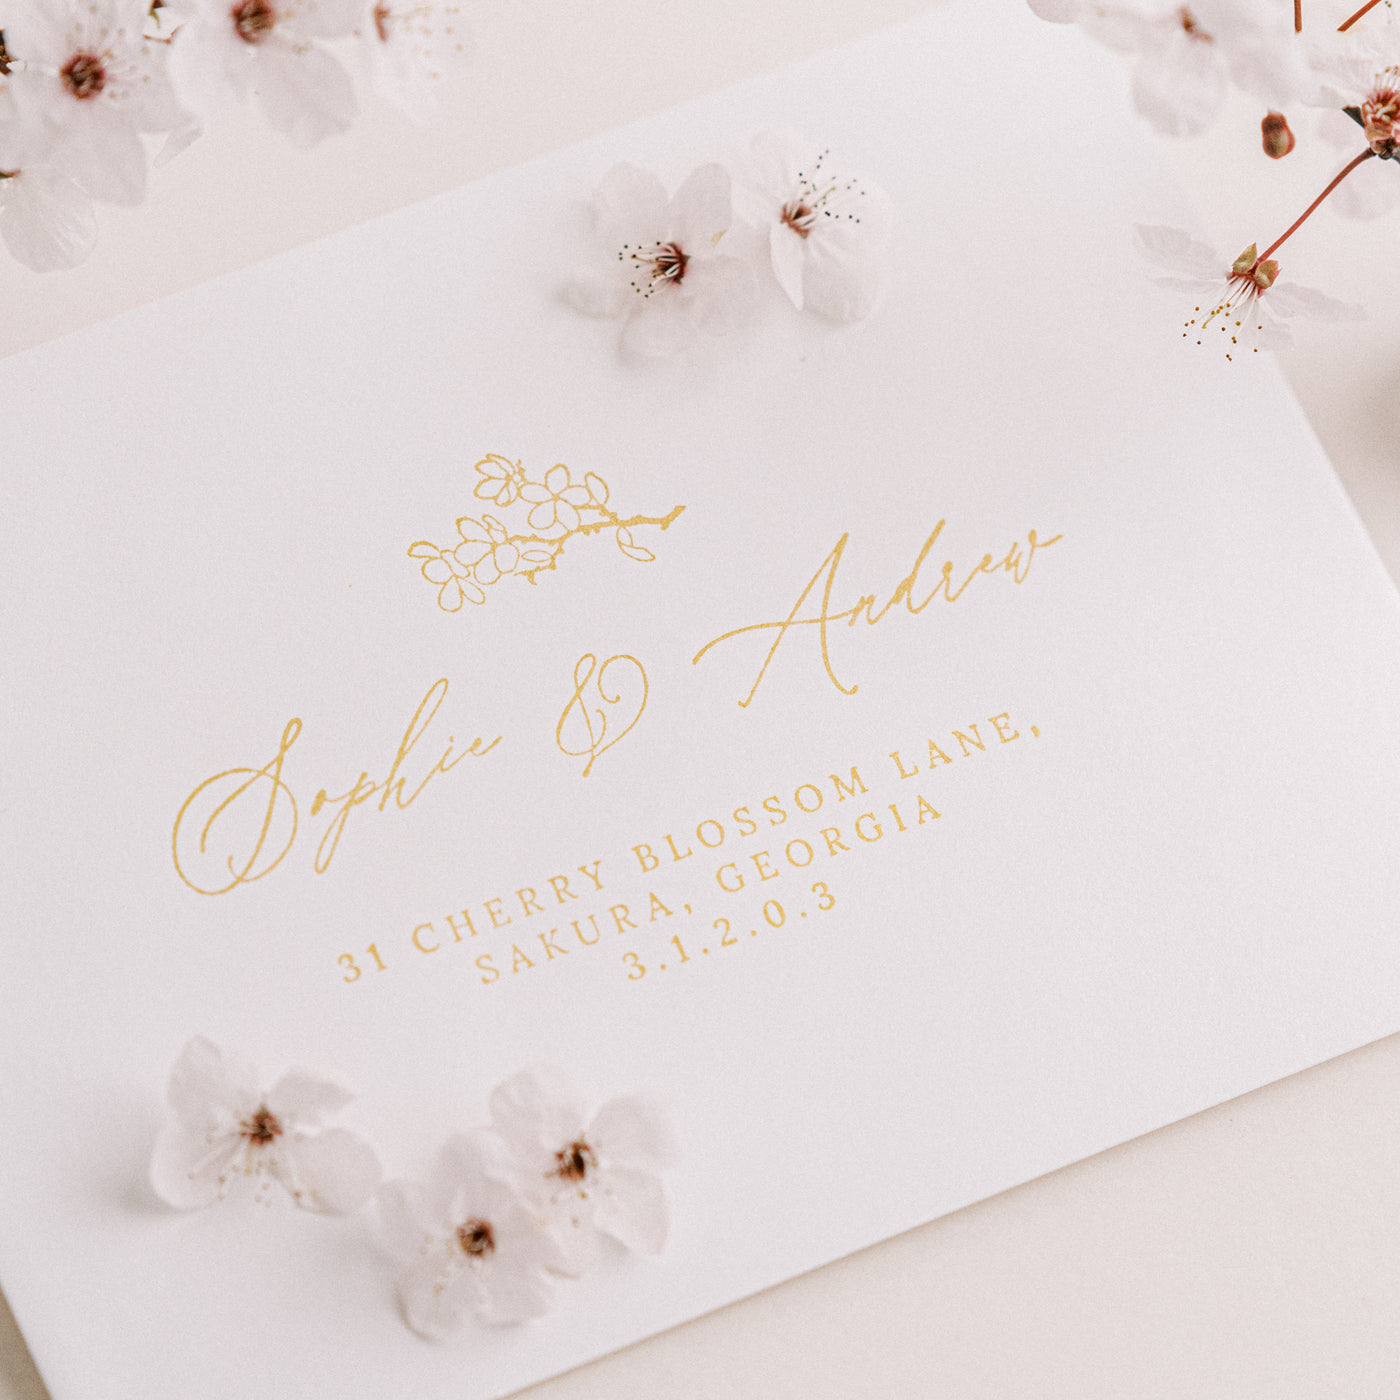 Misaki Cherry Blossom Return Address Rubber Stamp for Fine Art Wedding Invitations | 'Sakura' Cherry Blossom Embellishments for Blush Pink Spring Wedding | Heirloom Seals